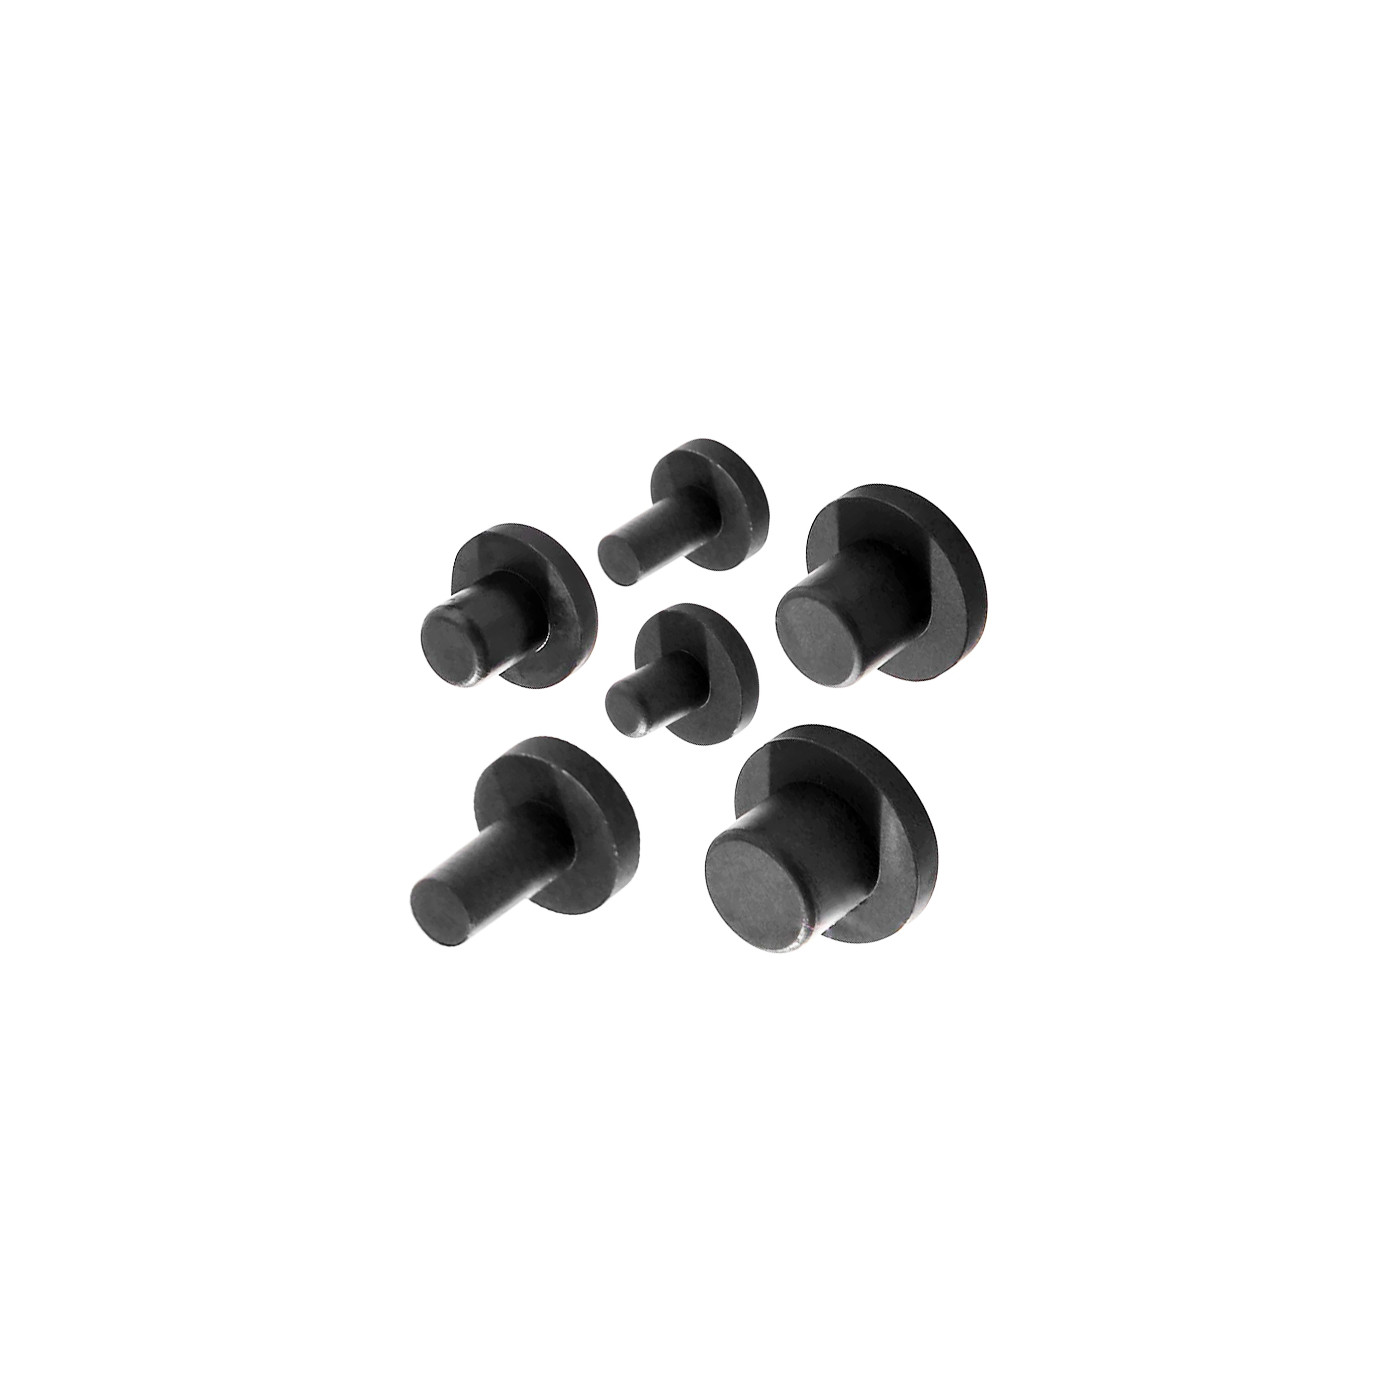 Set of 100 rubber plugs (inside, round, 4.4 mm, black)